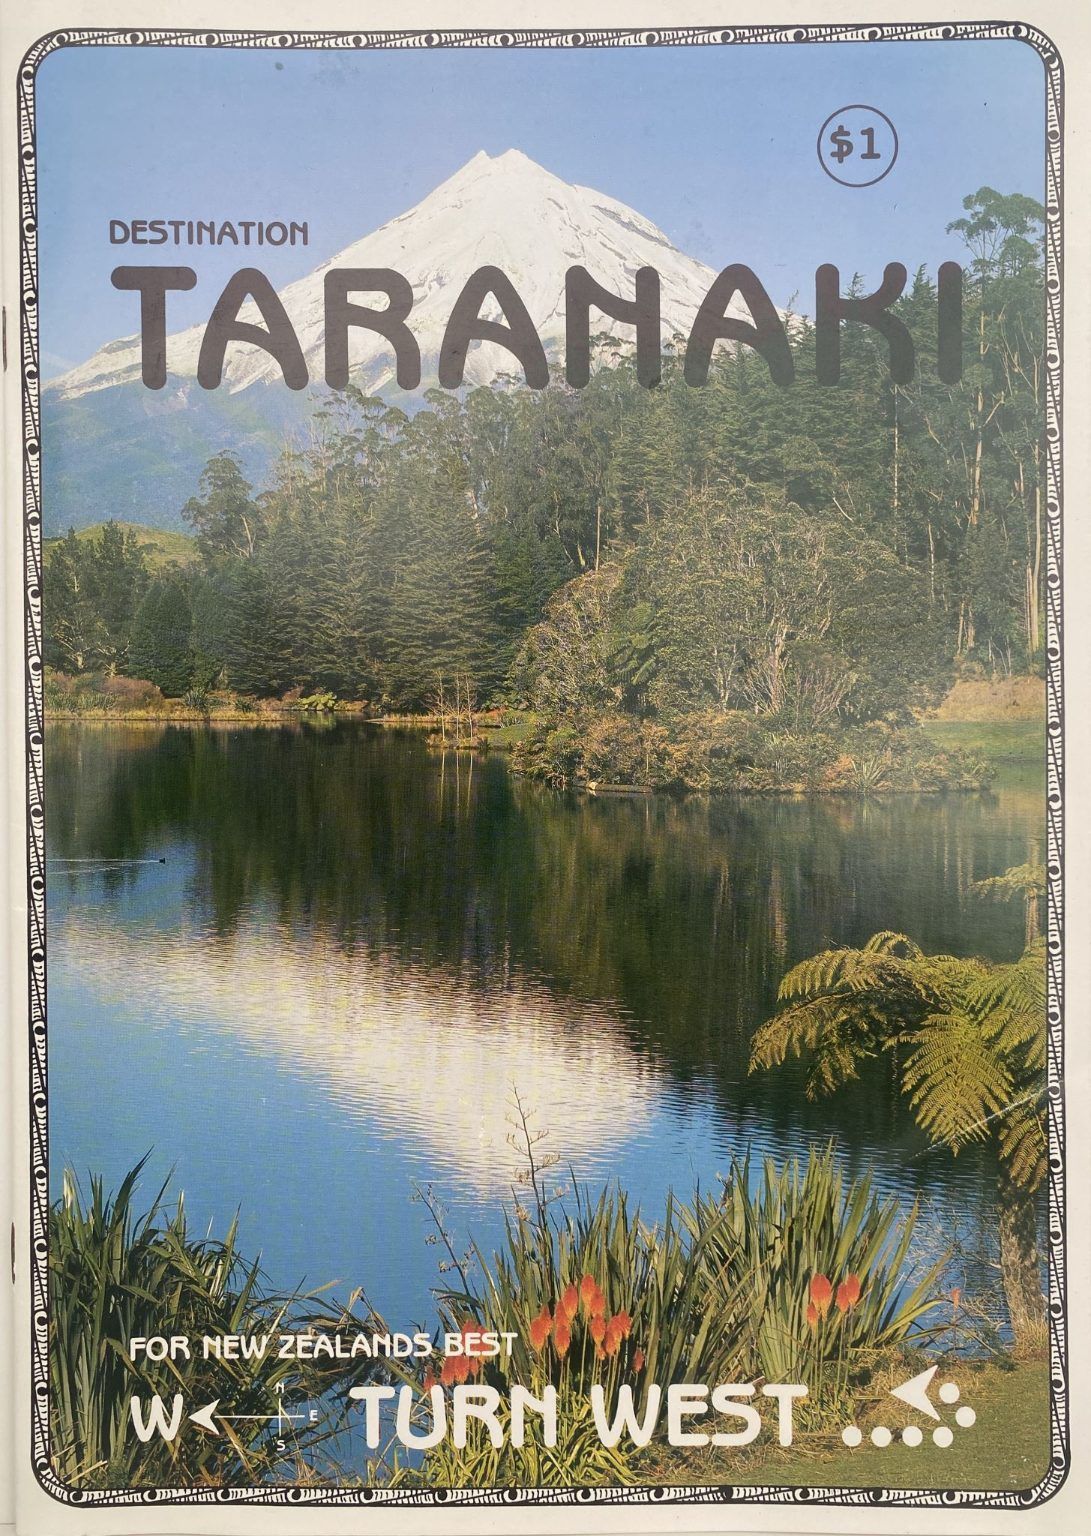 VINTAGE GUIDE: Destination Taranaki